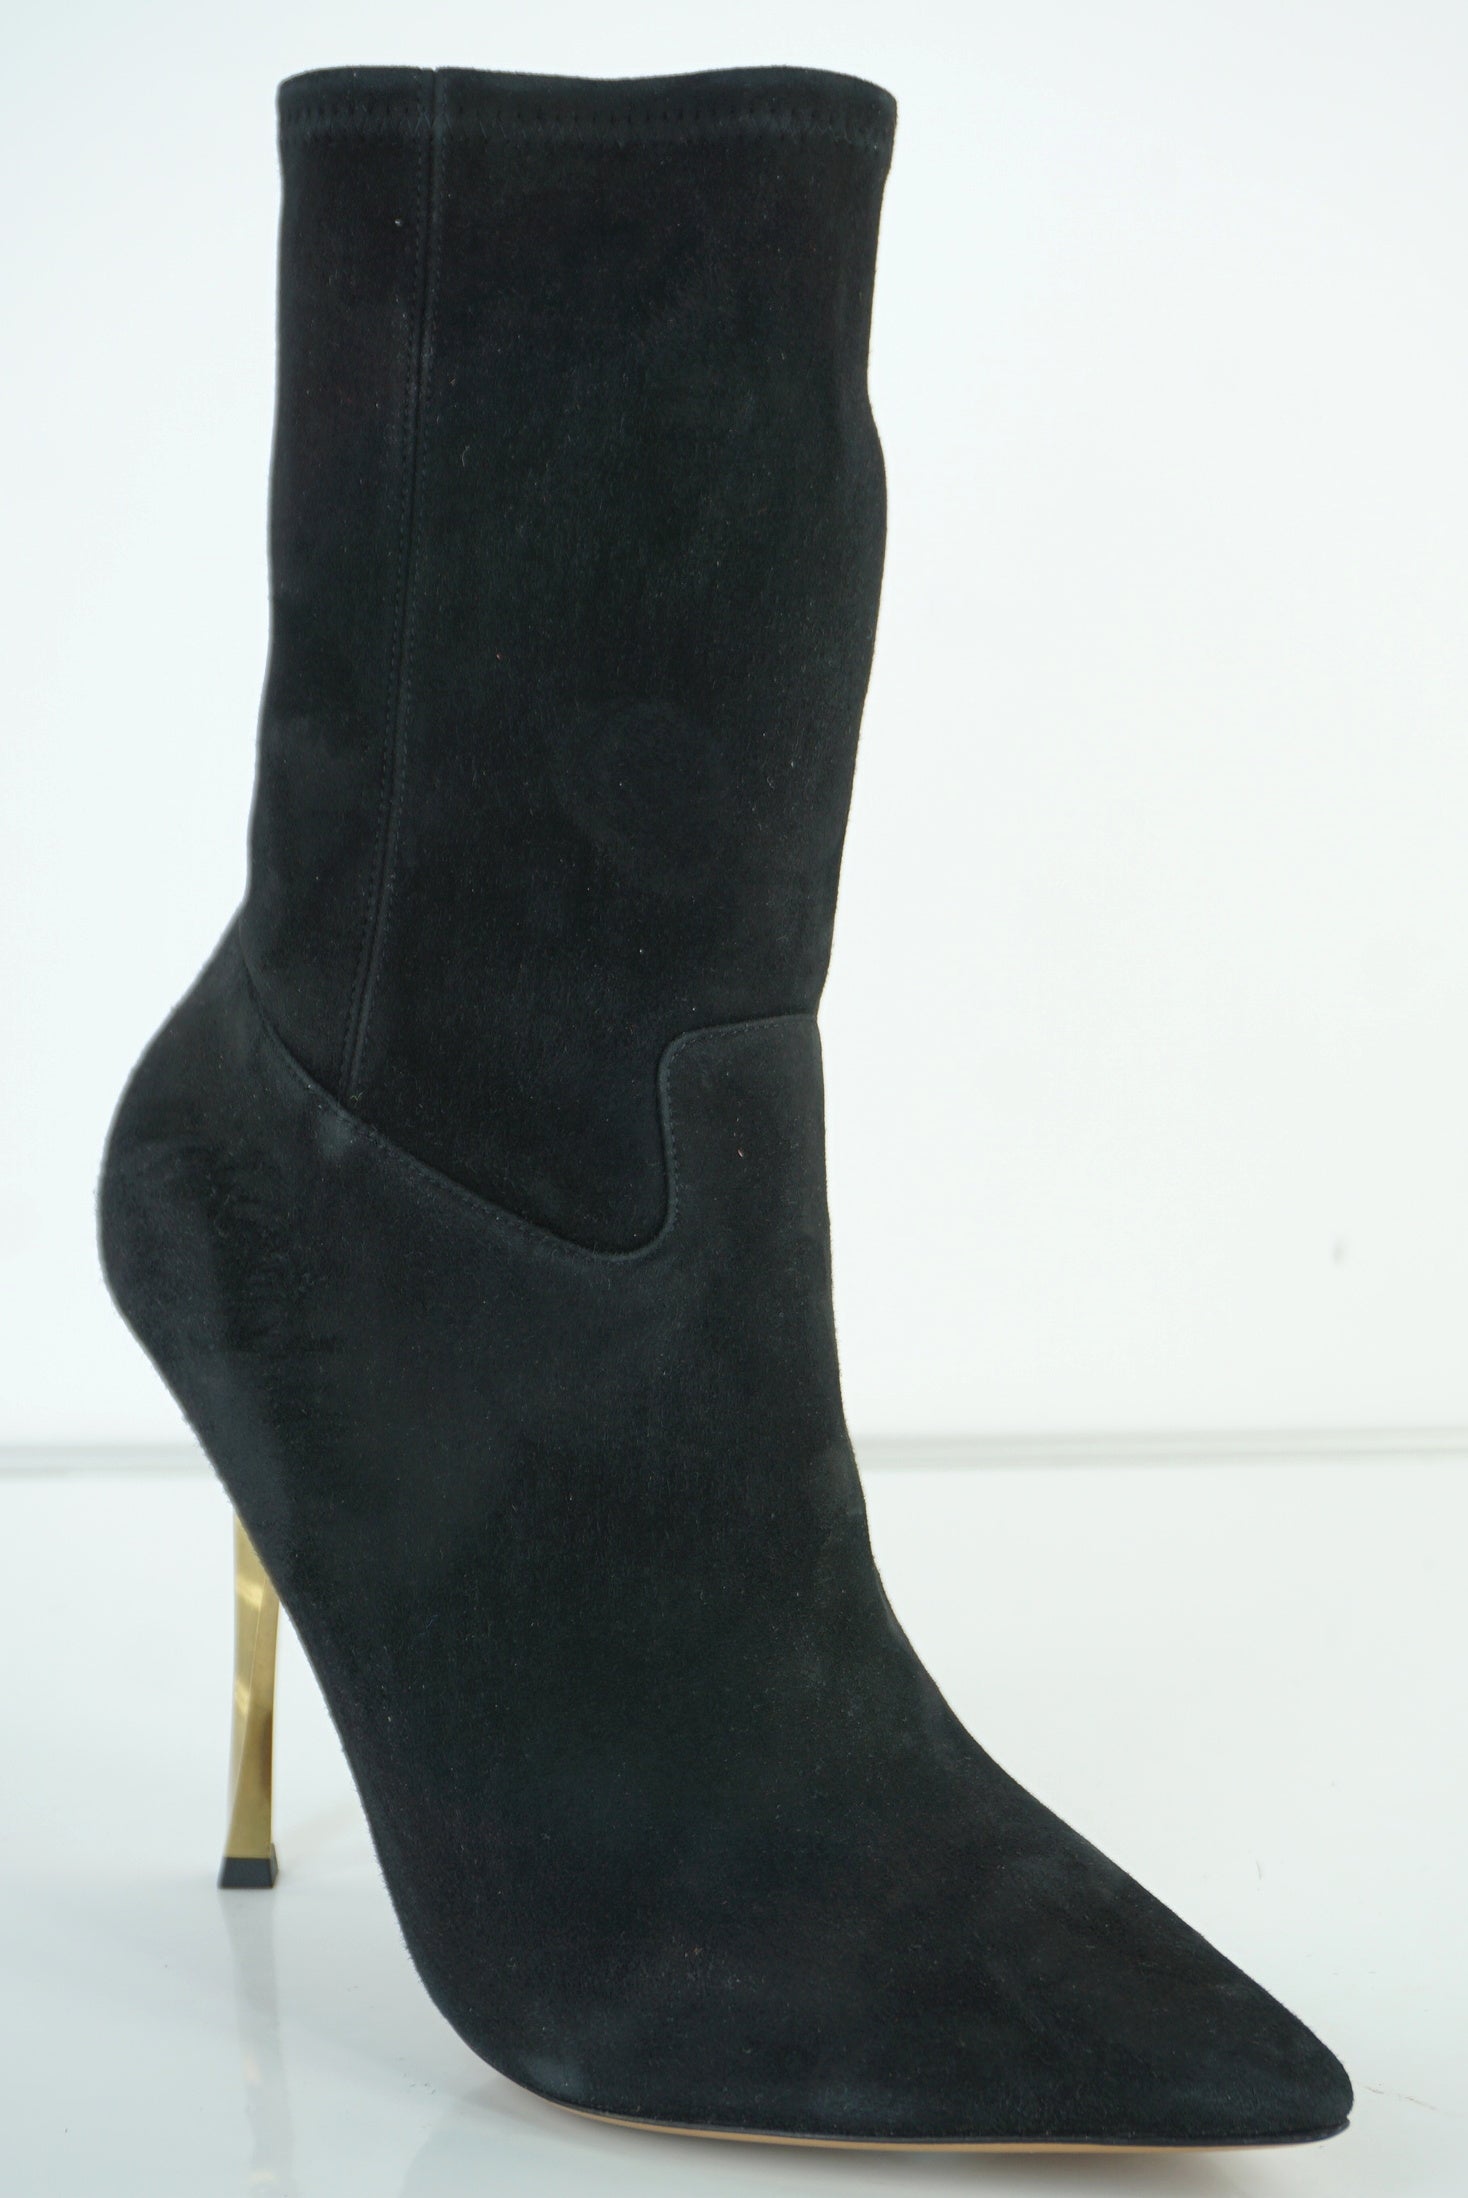 NIB Valentino Black Suede 'Twisteel' Stiletto Pointy Toe Bootie Size 39 $1445